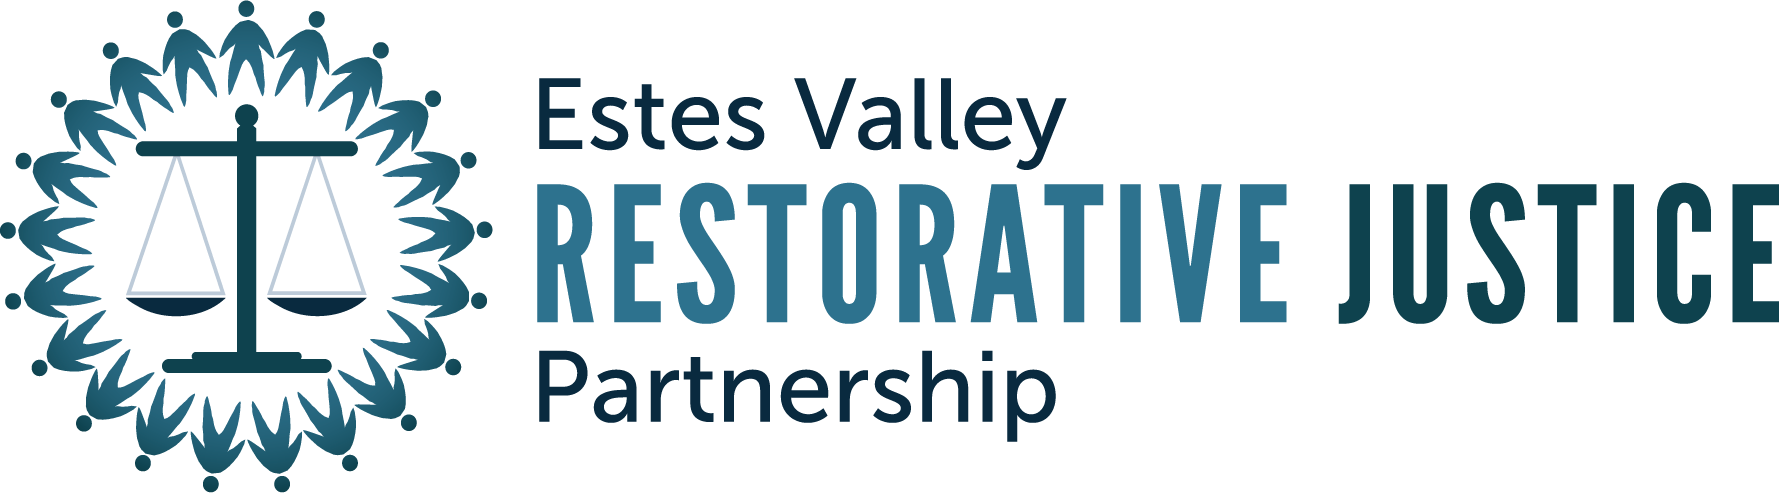 Estes Valley Restorative Justice Partnership logo - justice scale in circle of people